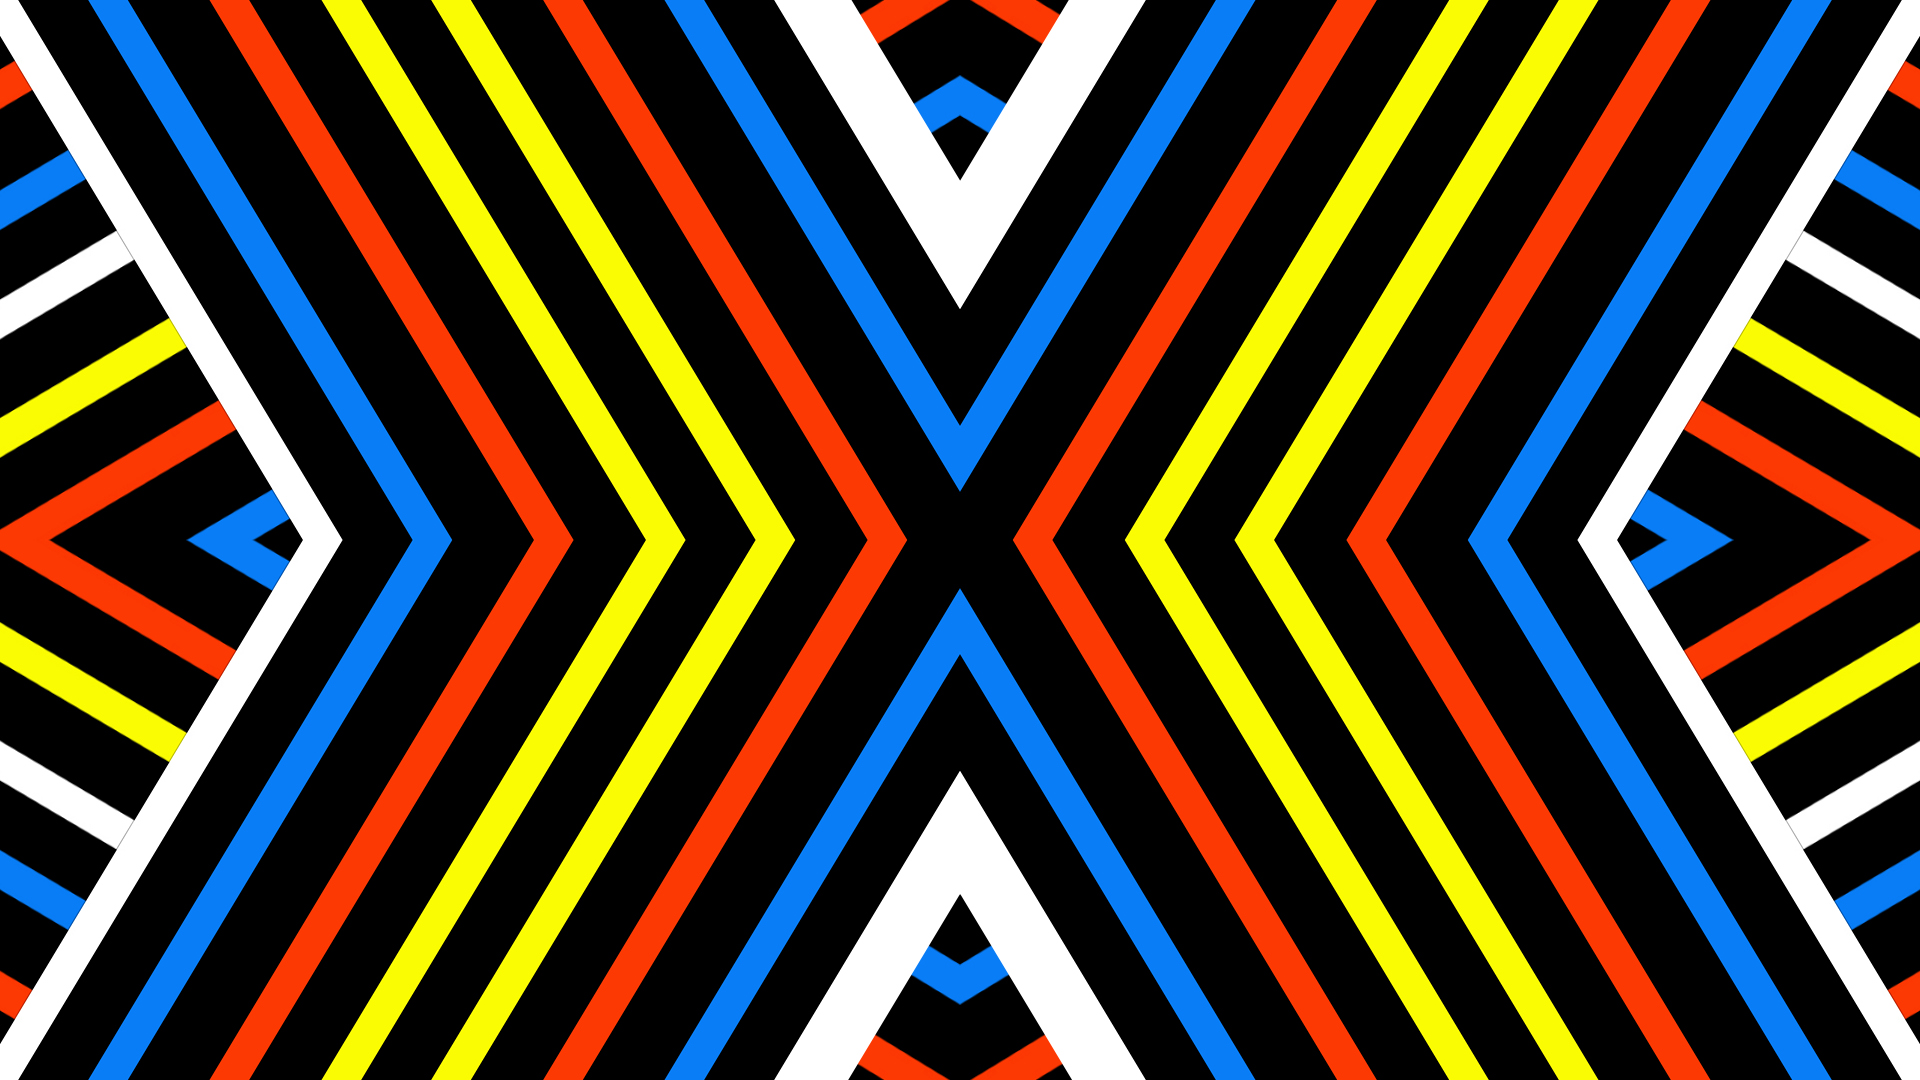 1001988 descargar imagen abstracto, rayas, azul, vistoso, geometría, rojo, simetría, amarillo: fondos de pantalla y protectores de pantalla gratis